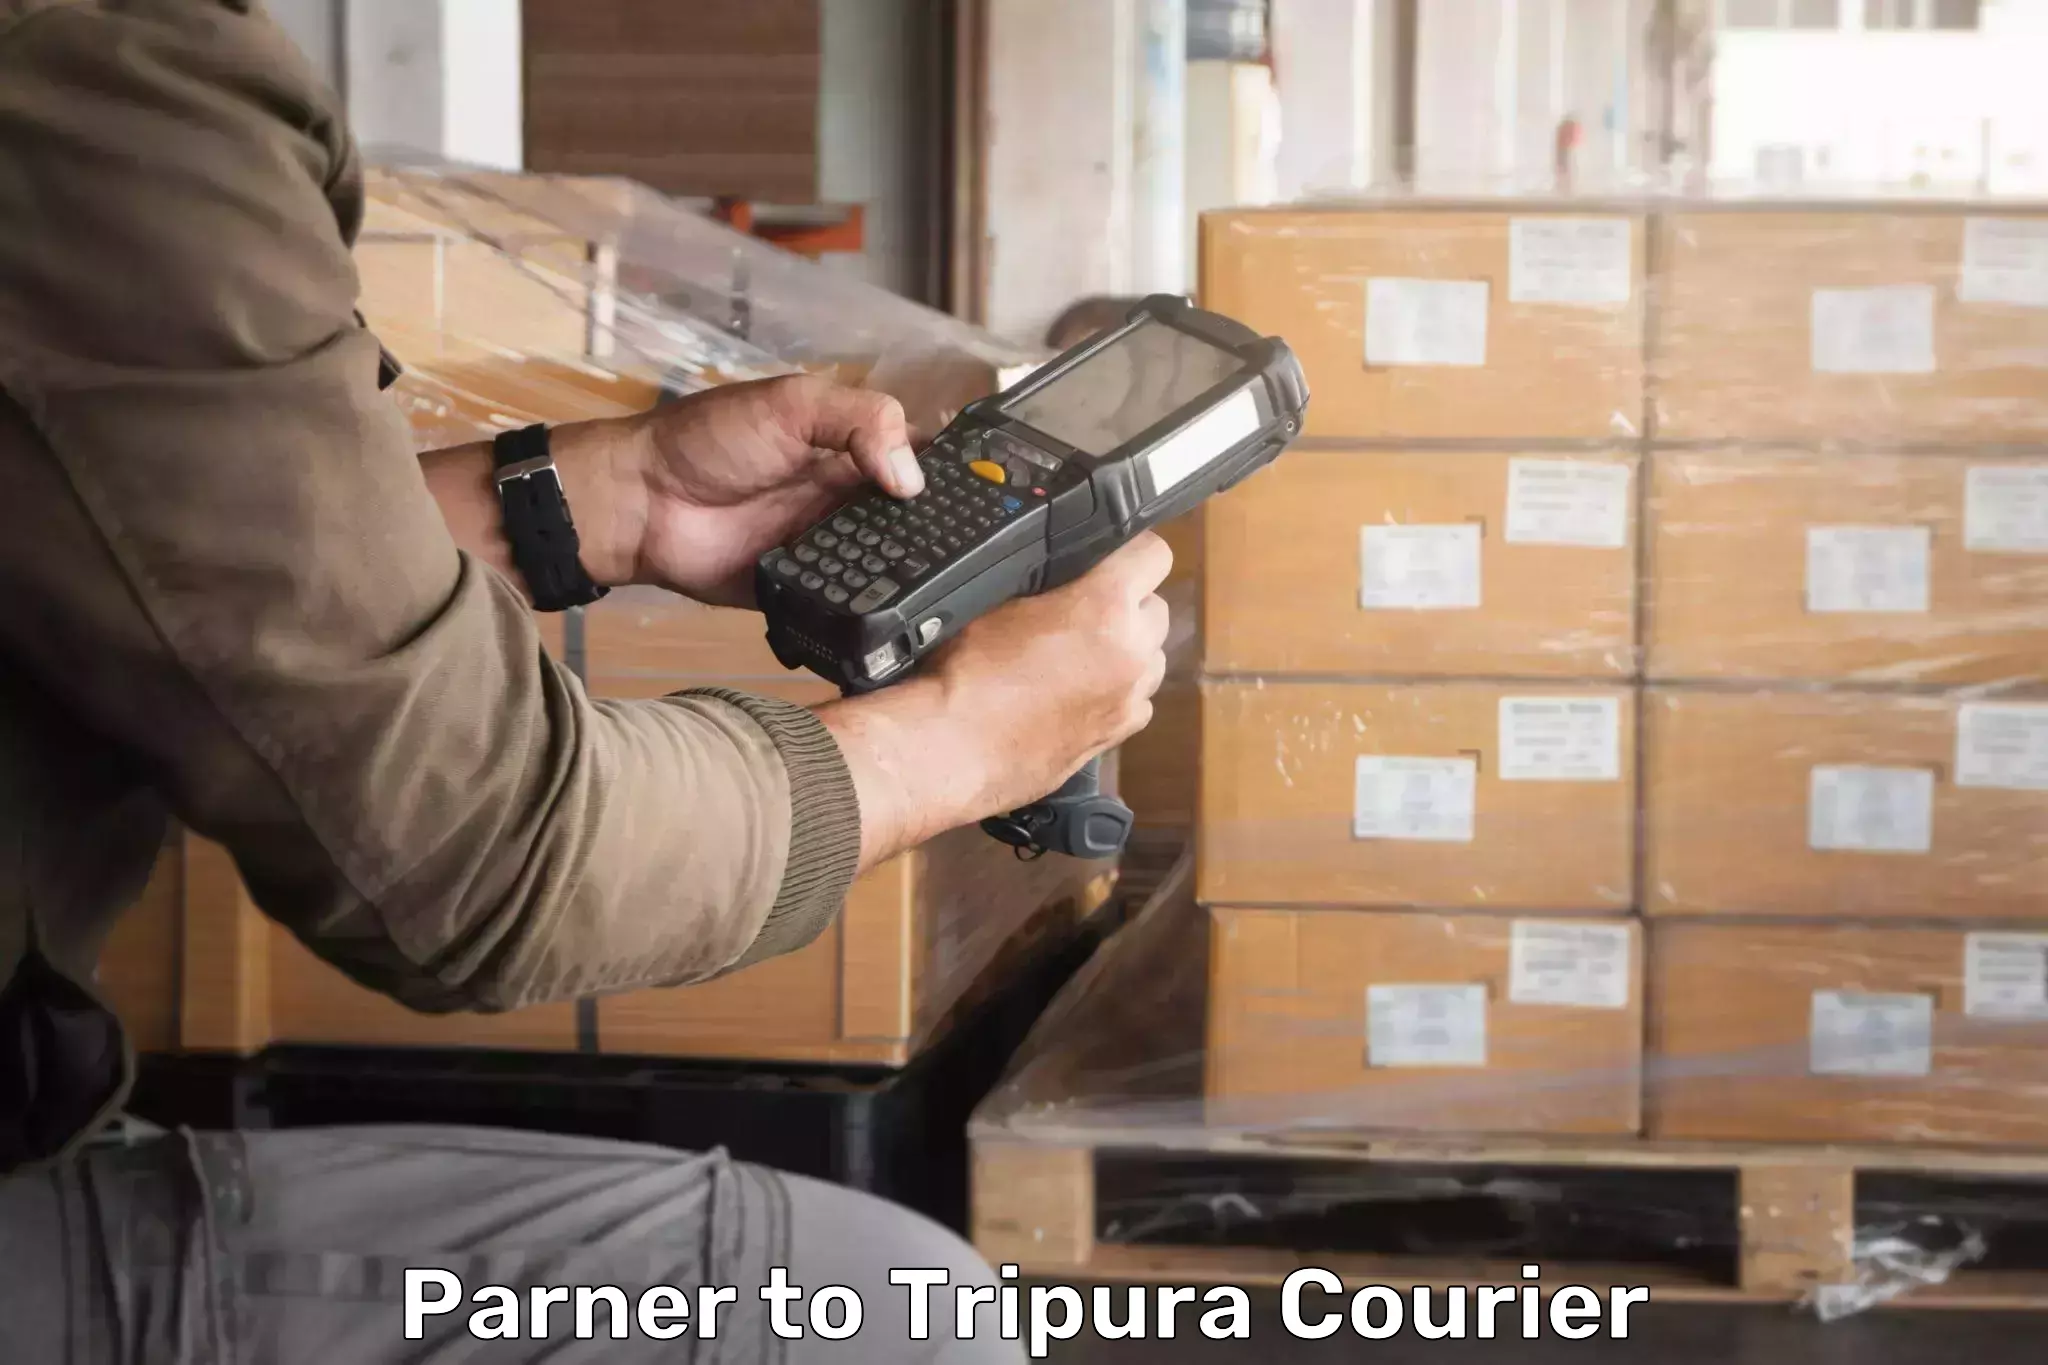 On-demand delivery Parner to Udaipur Tripura